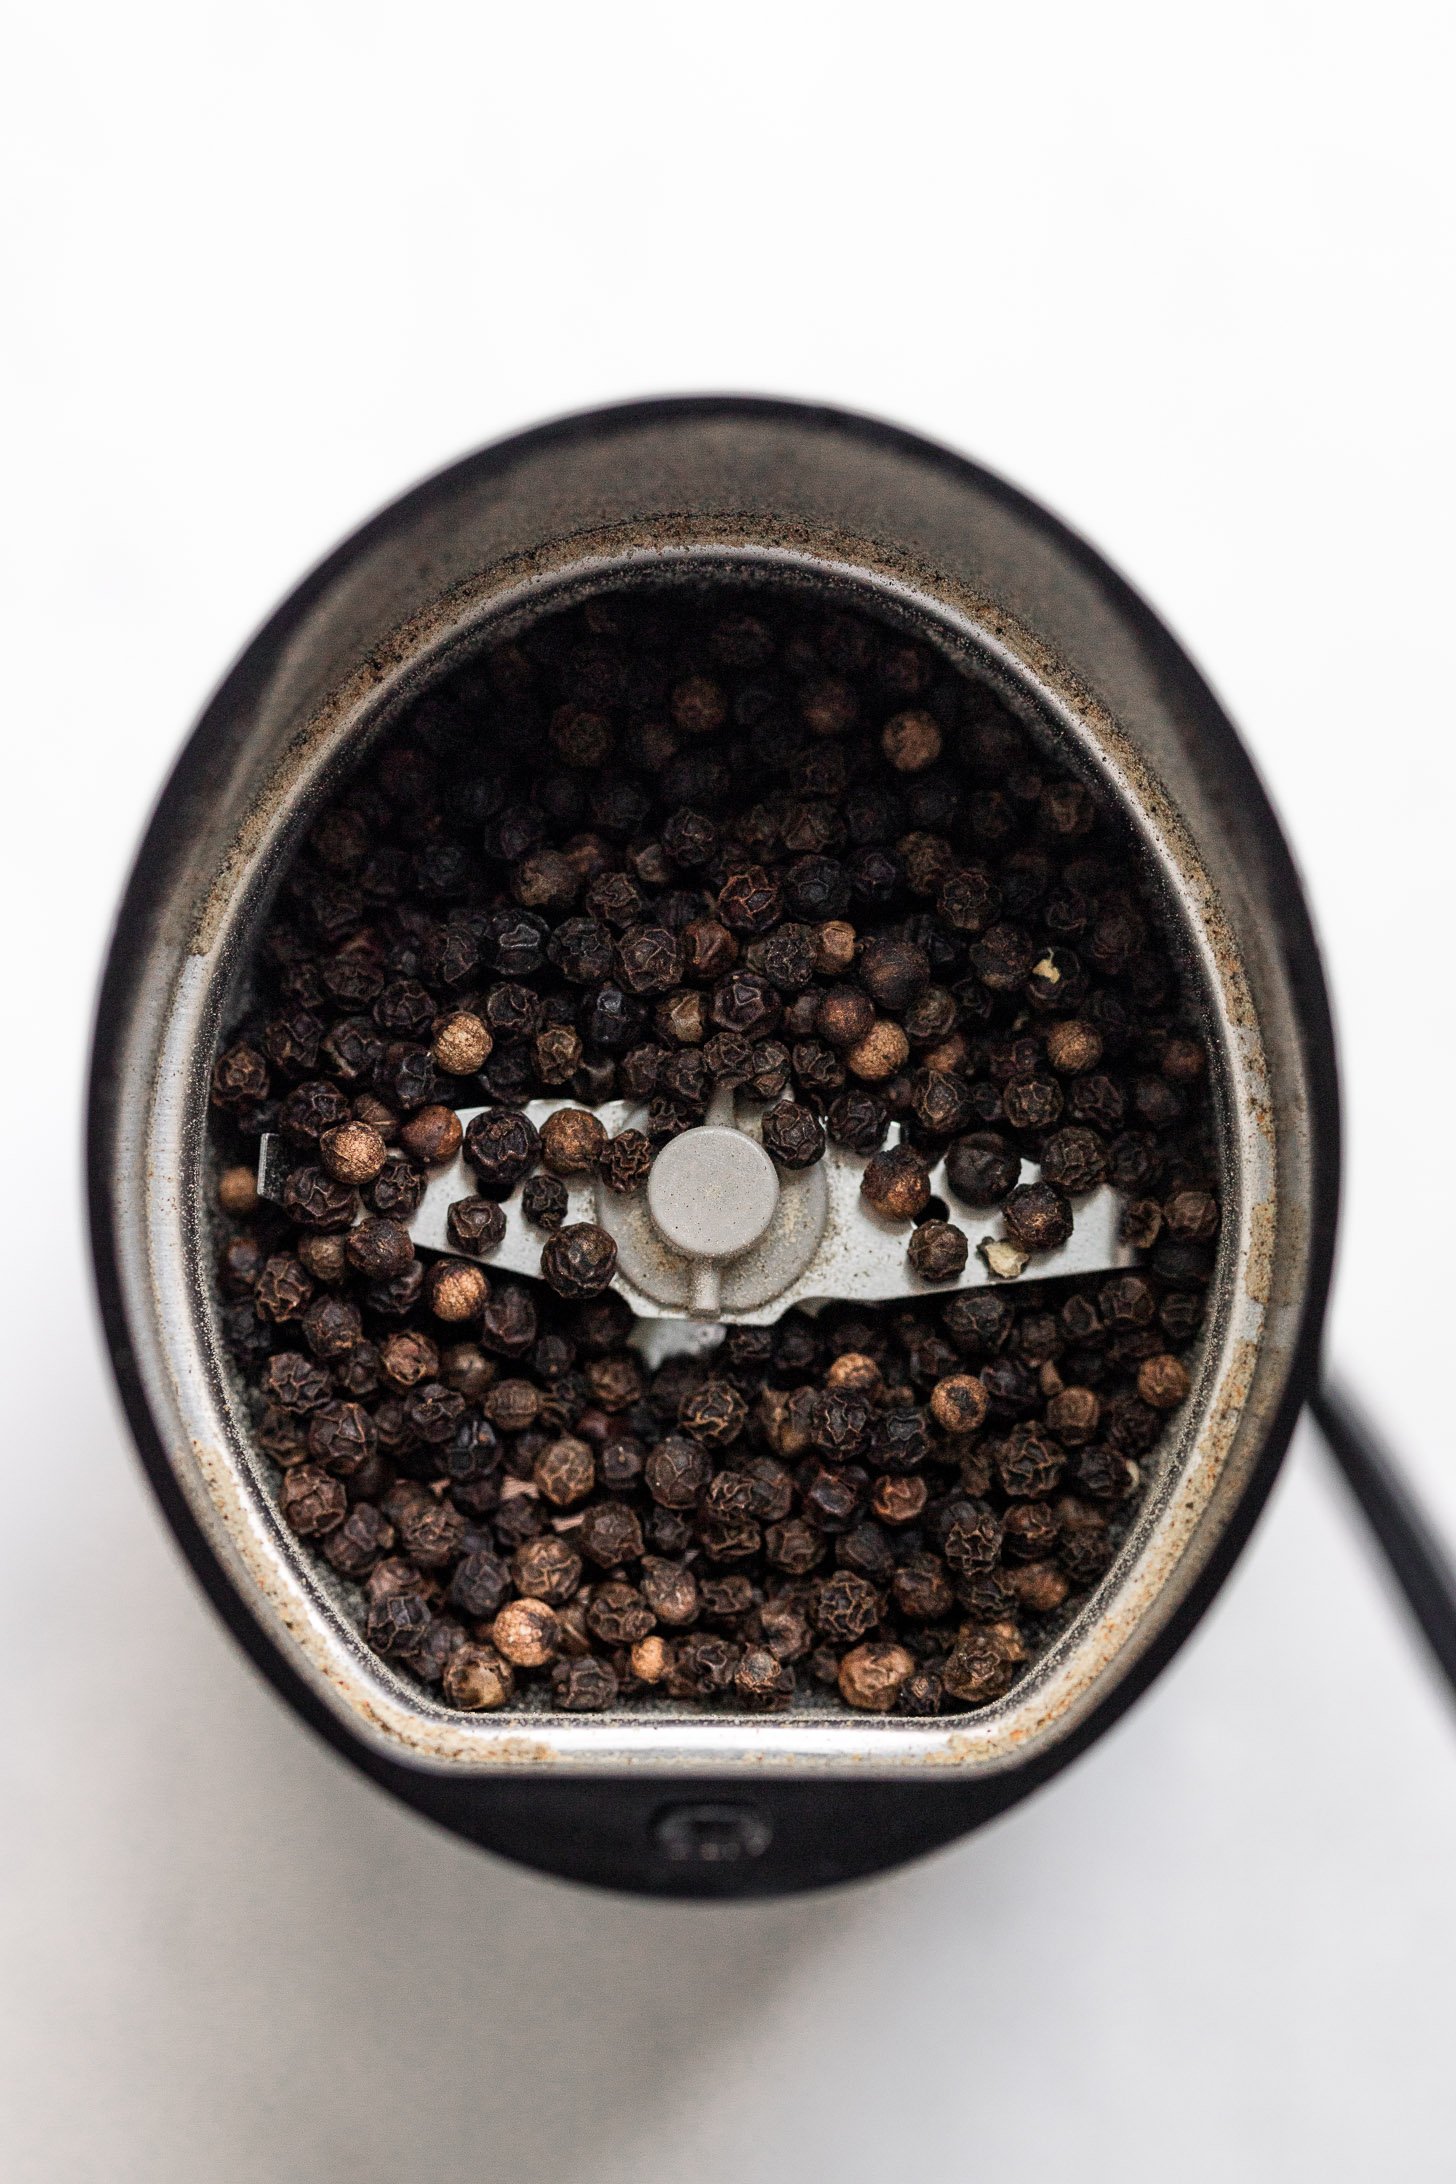 Peppercorns in spice grinder.